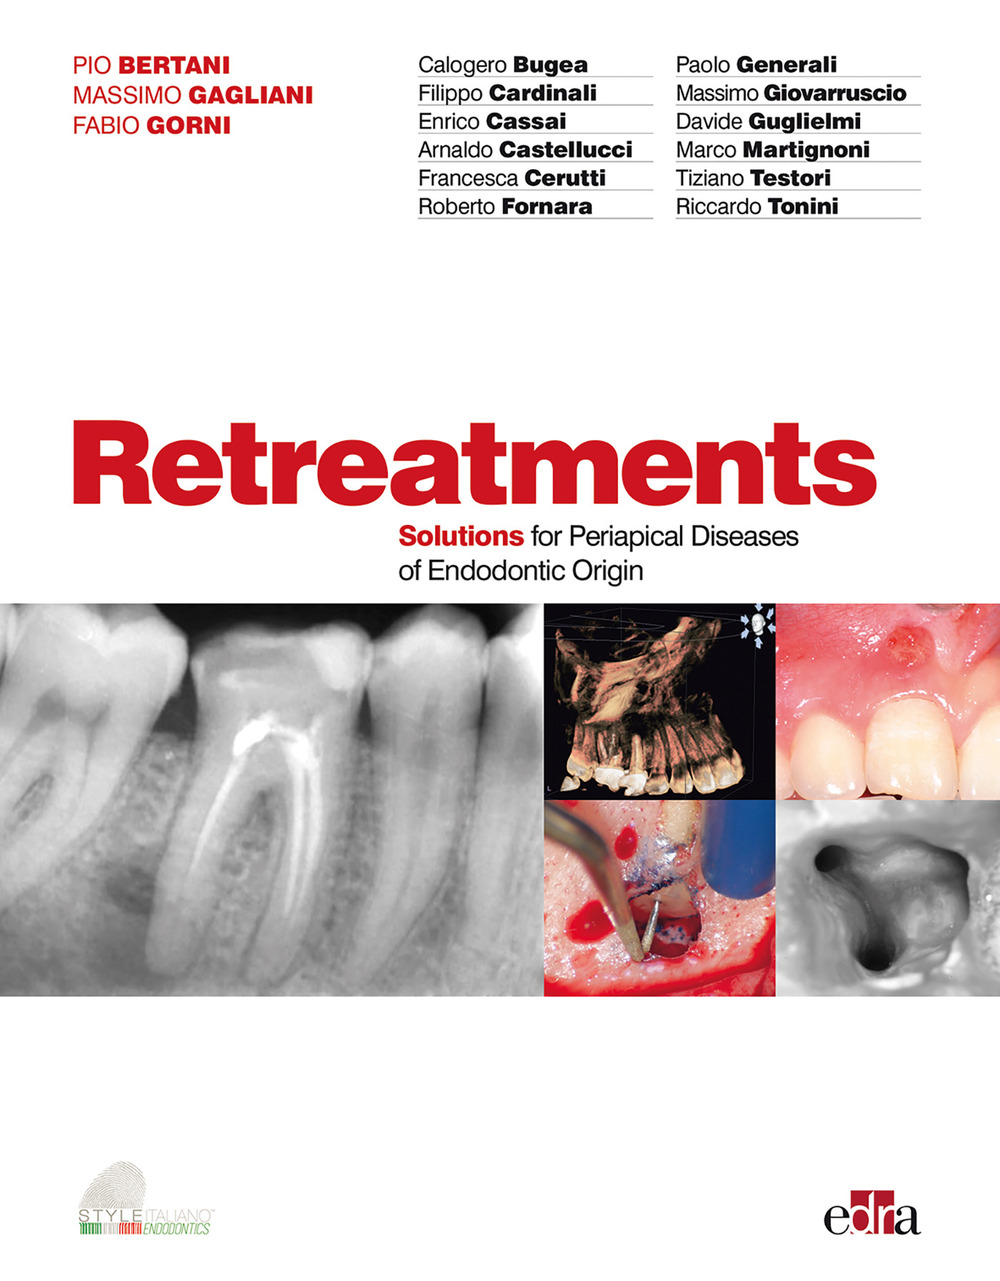 Retreatments. Solutions for periapical diseases of endodontic origin